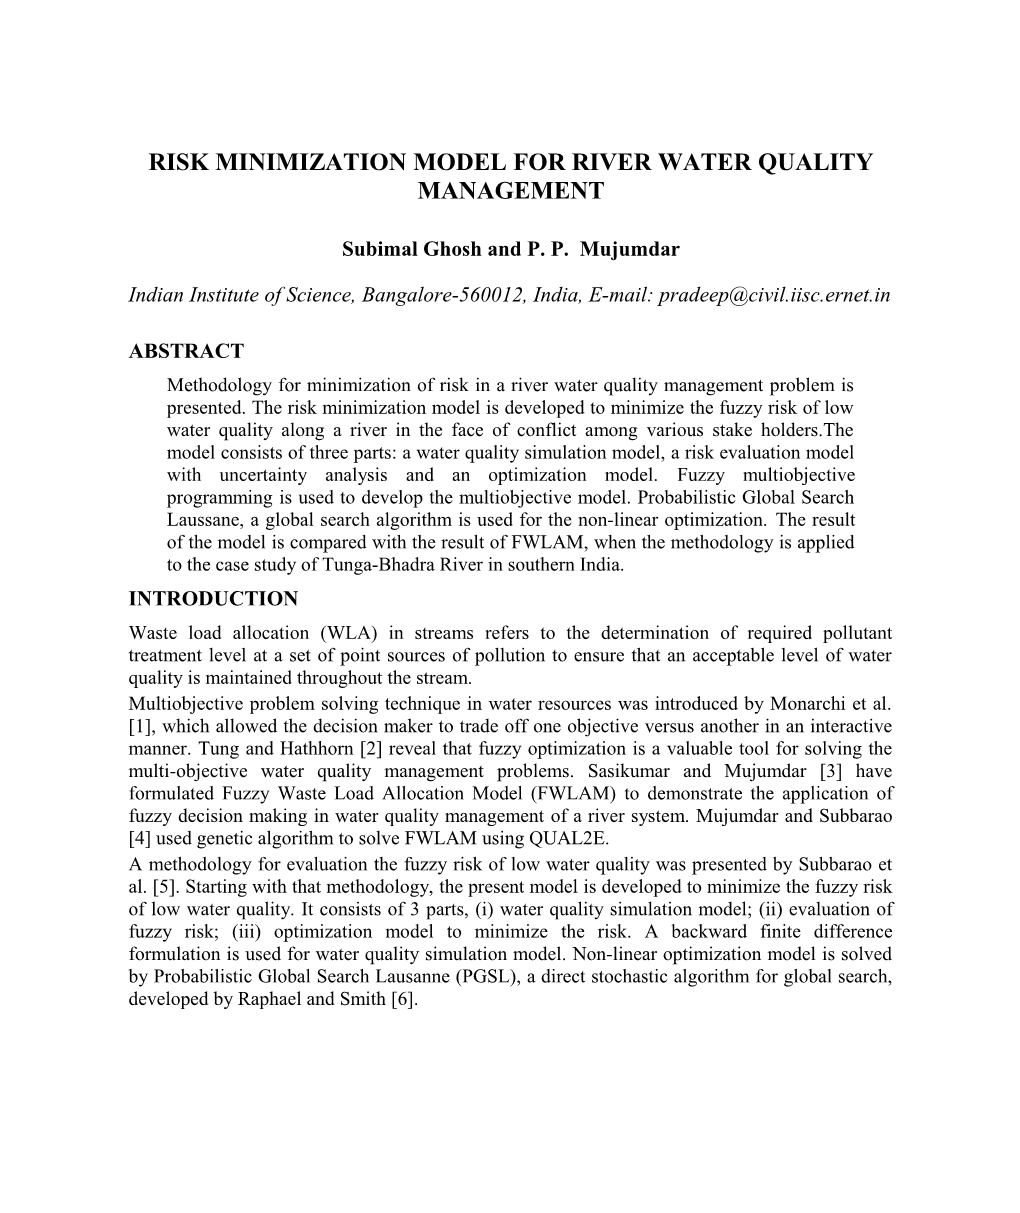 Risk Minimization Model for River Water Quality Management